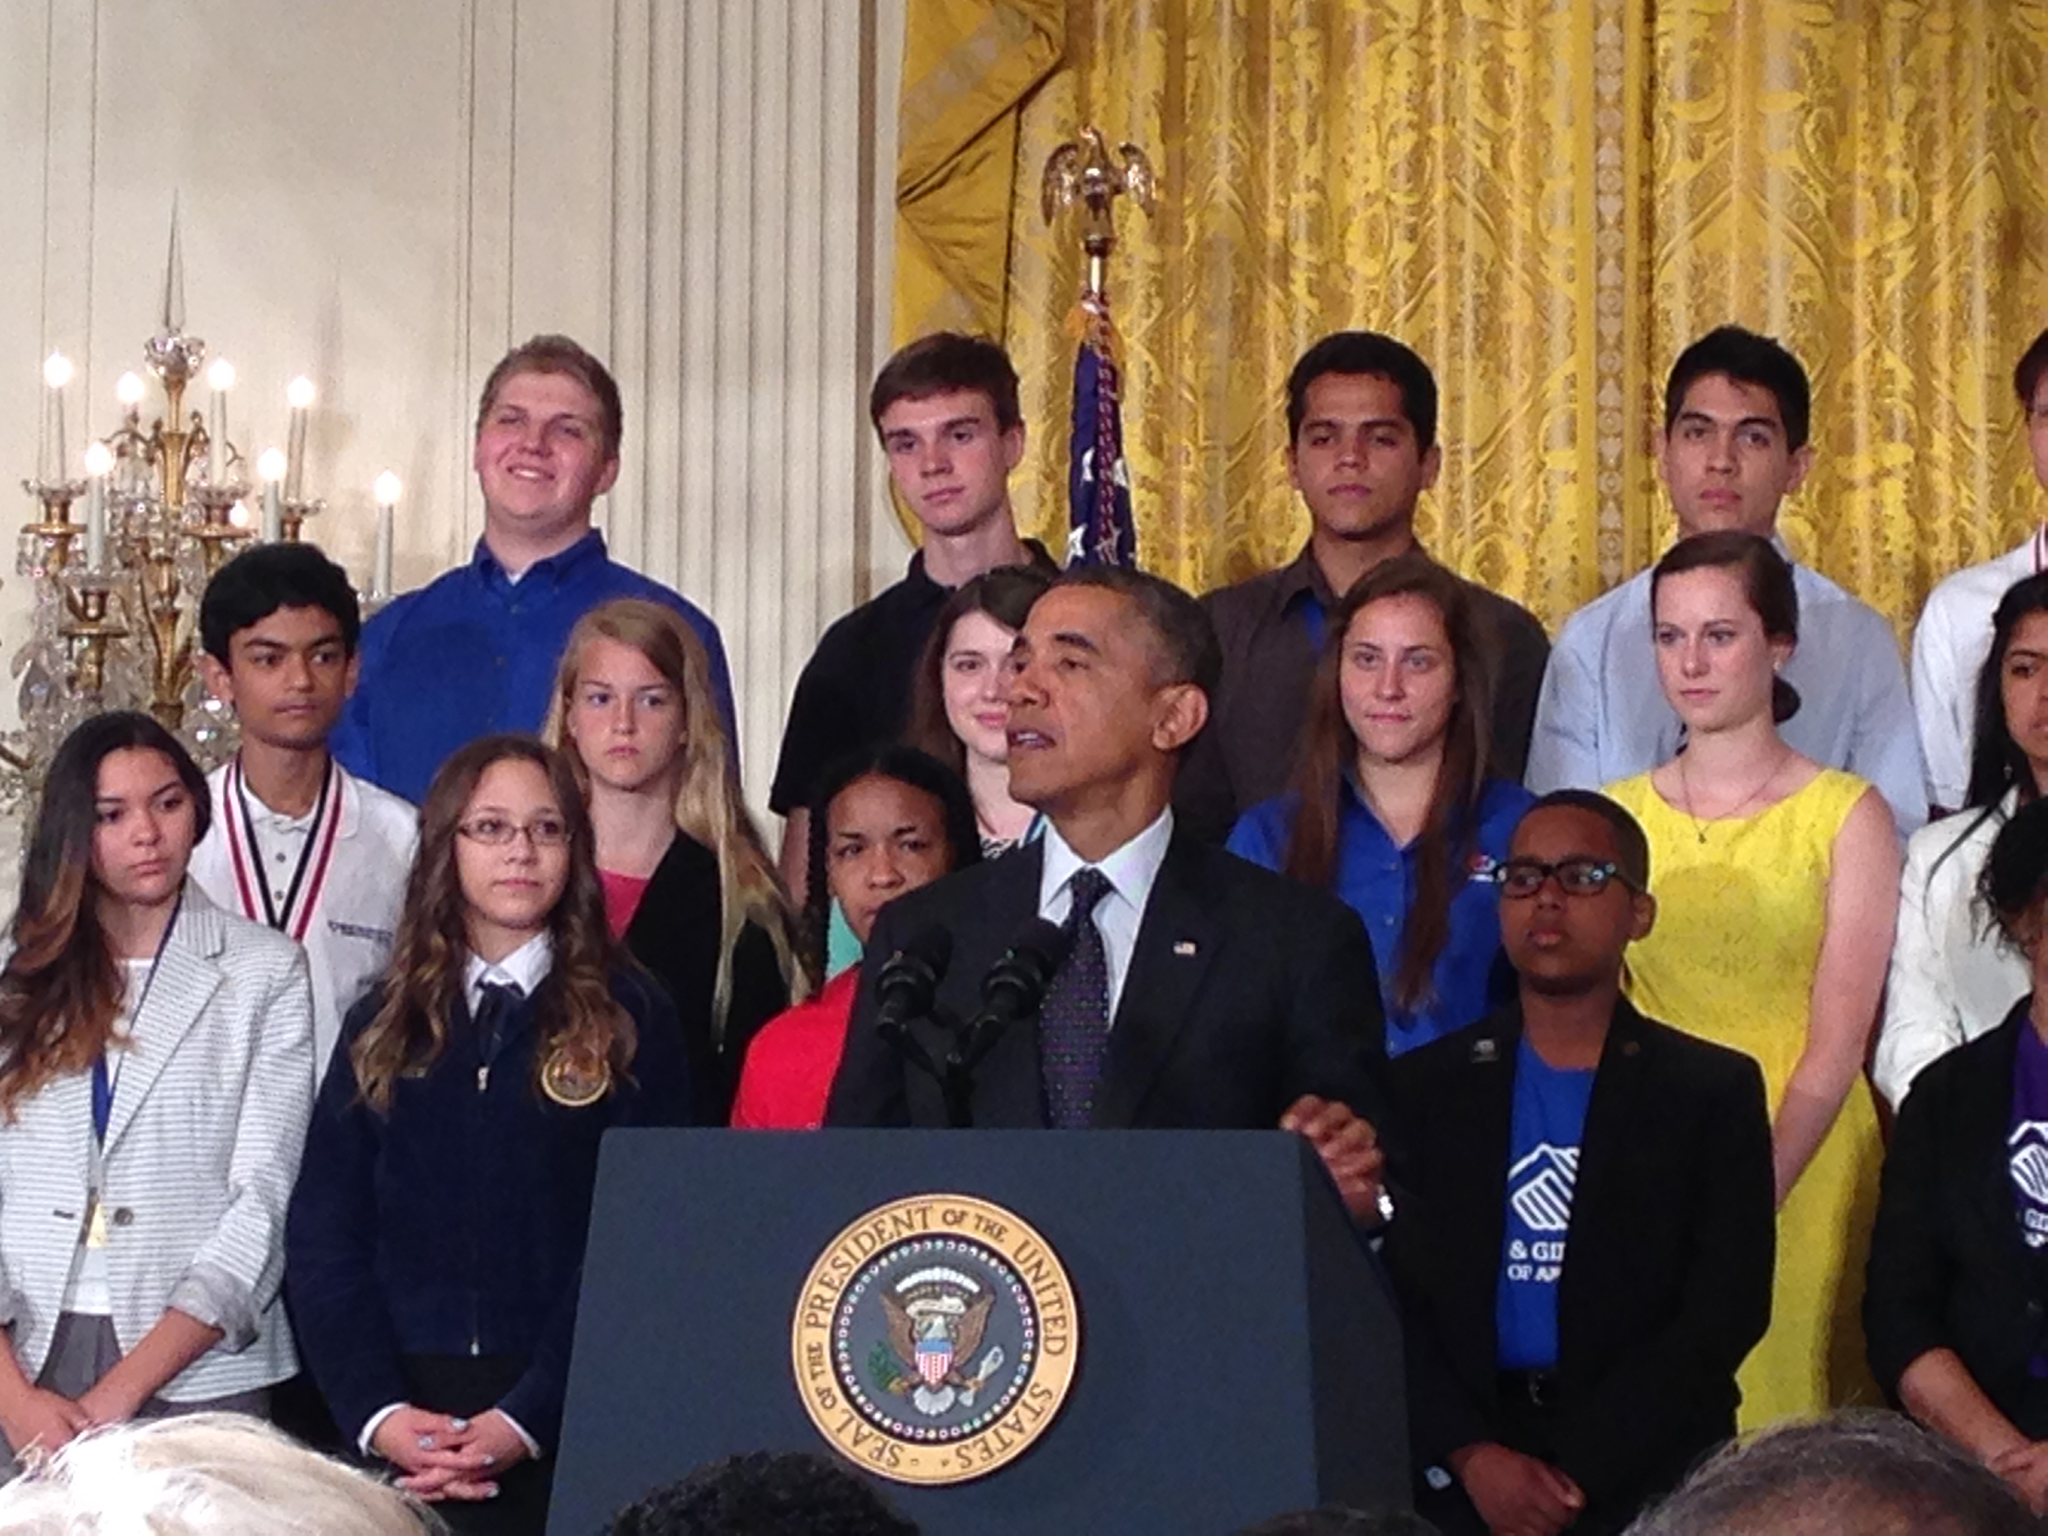 President Obama speaks to Society alumni at the White House Science Fair